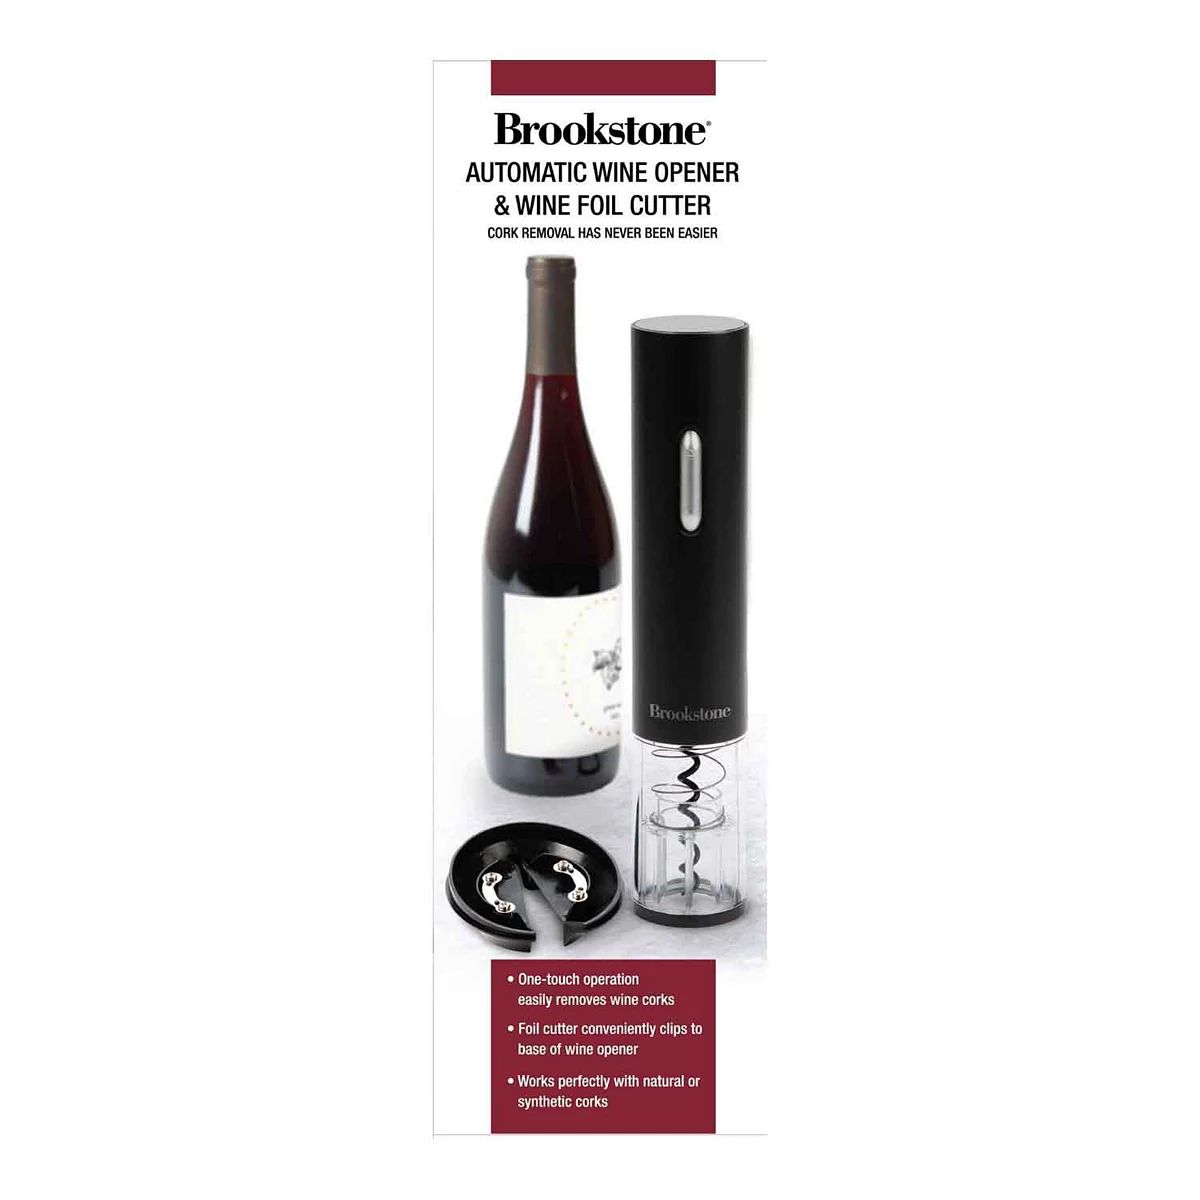 Brookstone Automatic Wine Opener & Foil Cutter | Kohl's